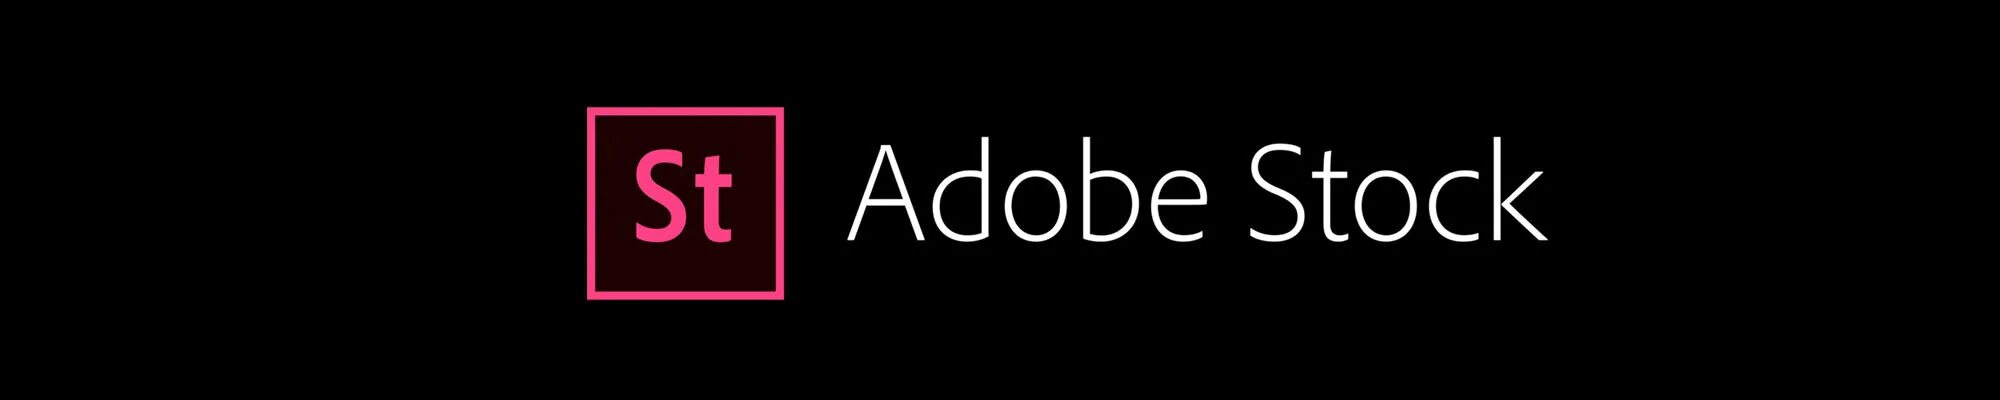 Adobe stock. Adobe Сток. Логотип адоб Сток. Фотобанк Adobe stock. Адоб сток контрибутор